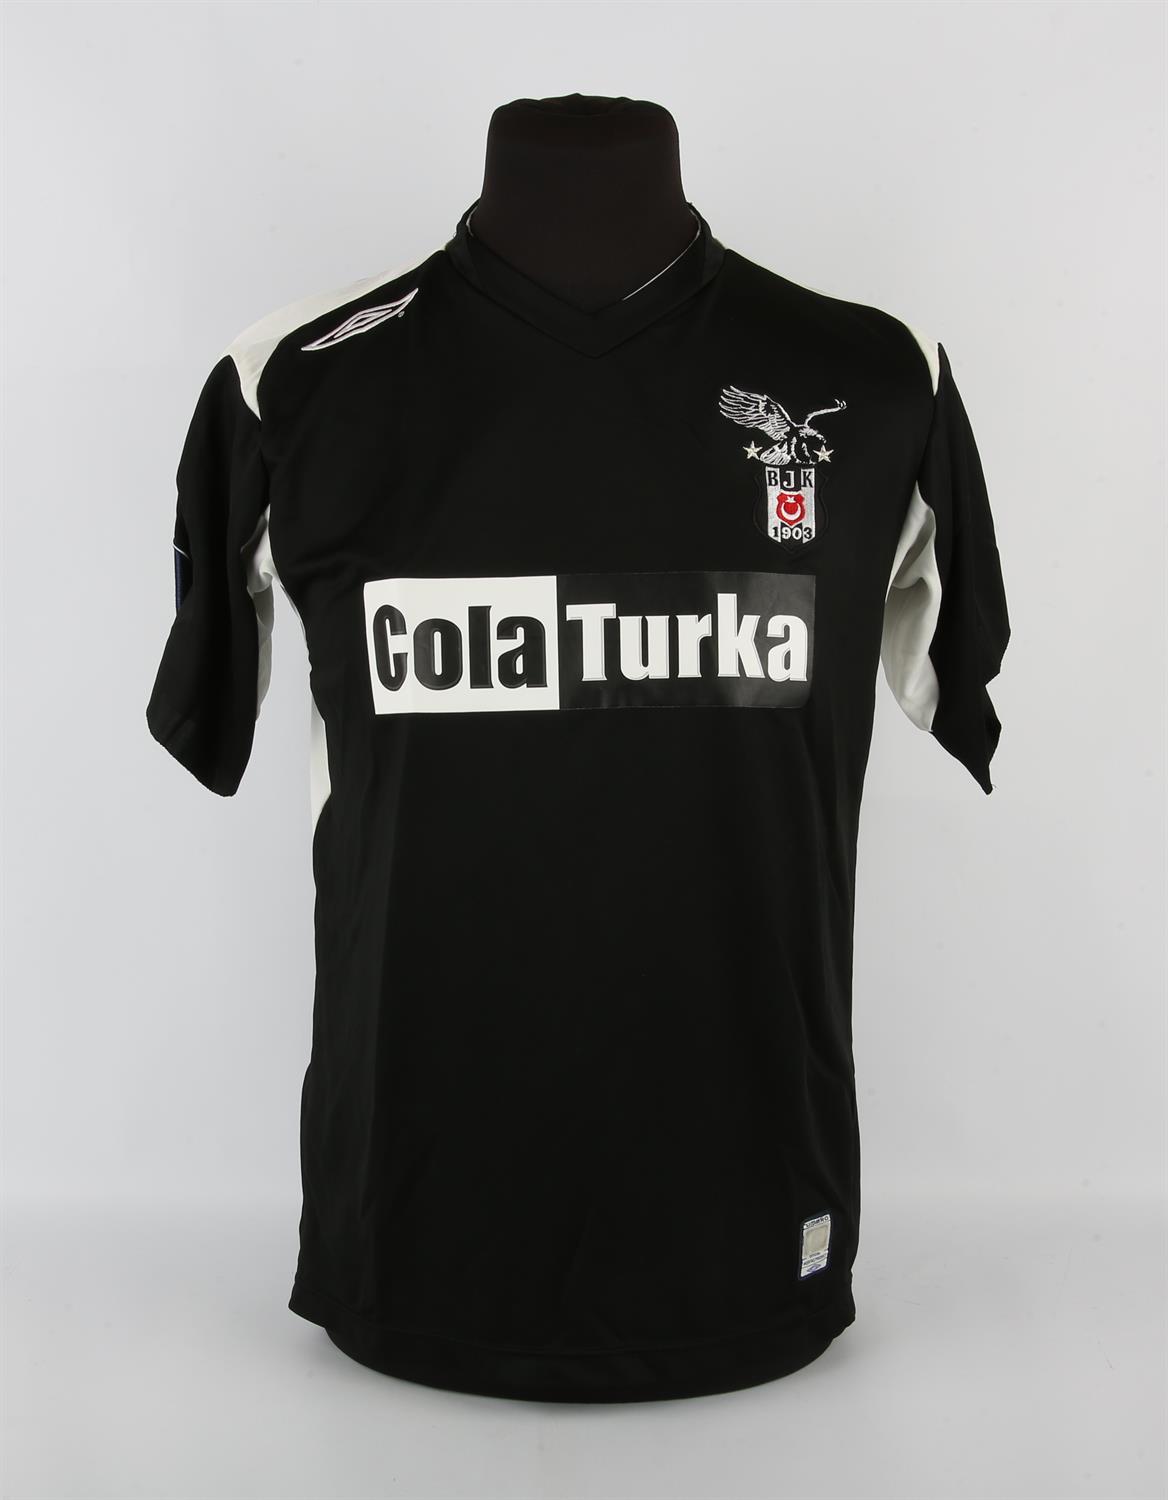 Besiktas FC UEFA Cup 2006 / 07, Nobre (11) shirt. S/S. Match worn 19 Oct 2006 Besiktas v Spurs. - Image 2 of 2